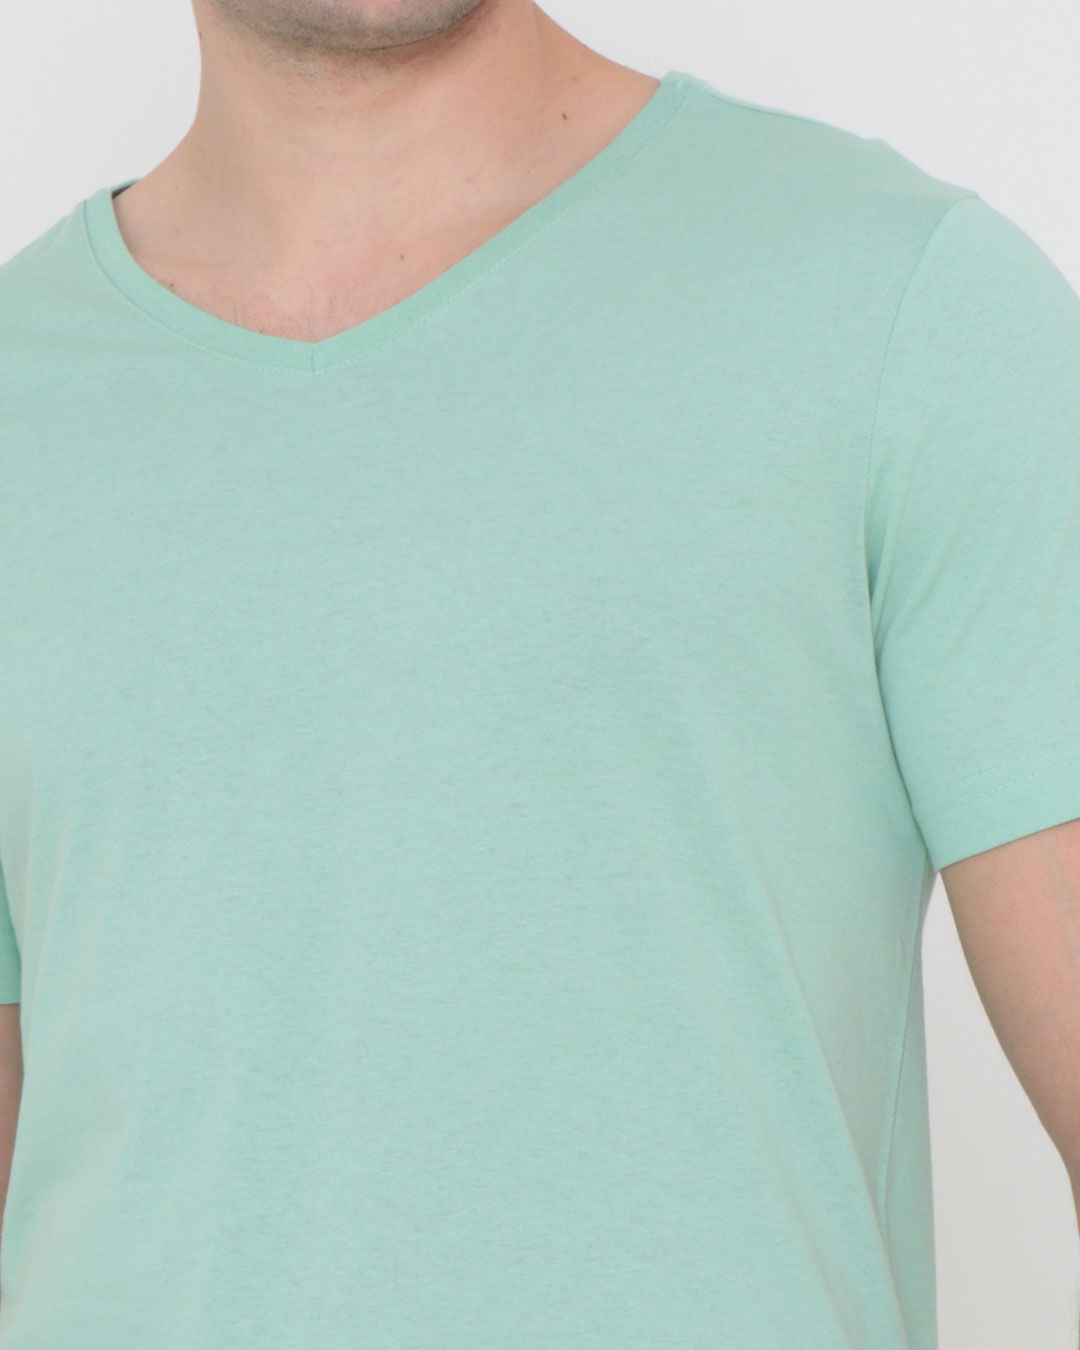 Camiseta-Masculina-Decote-V-Basica-Verde-Claro